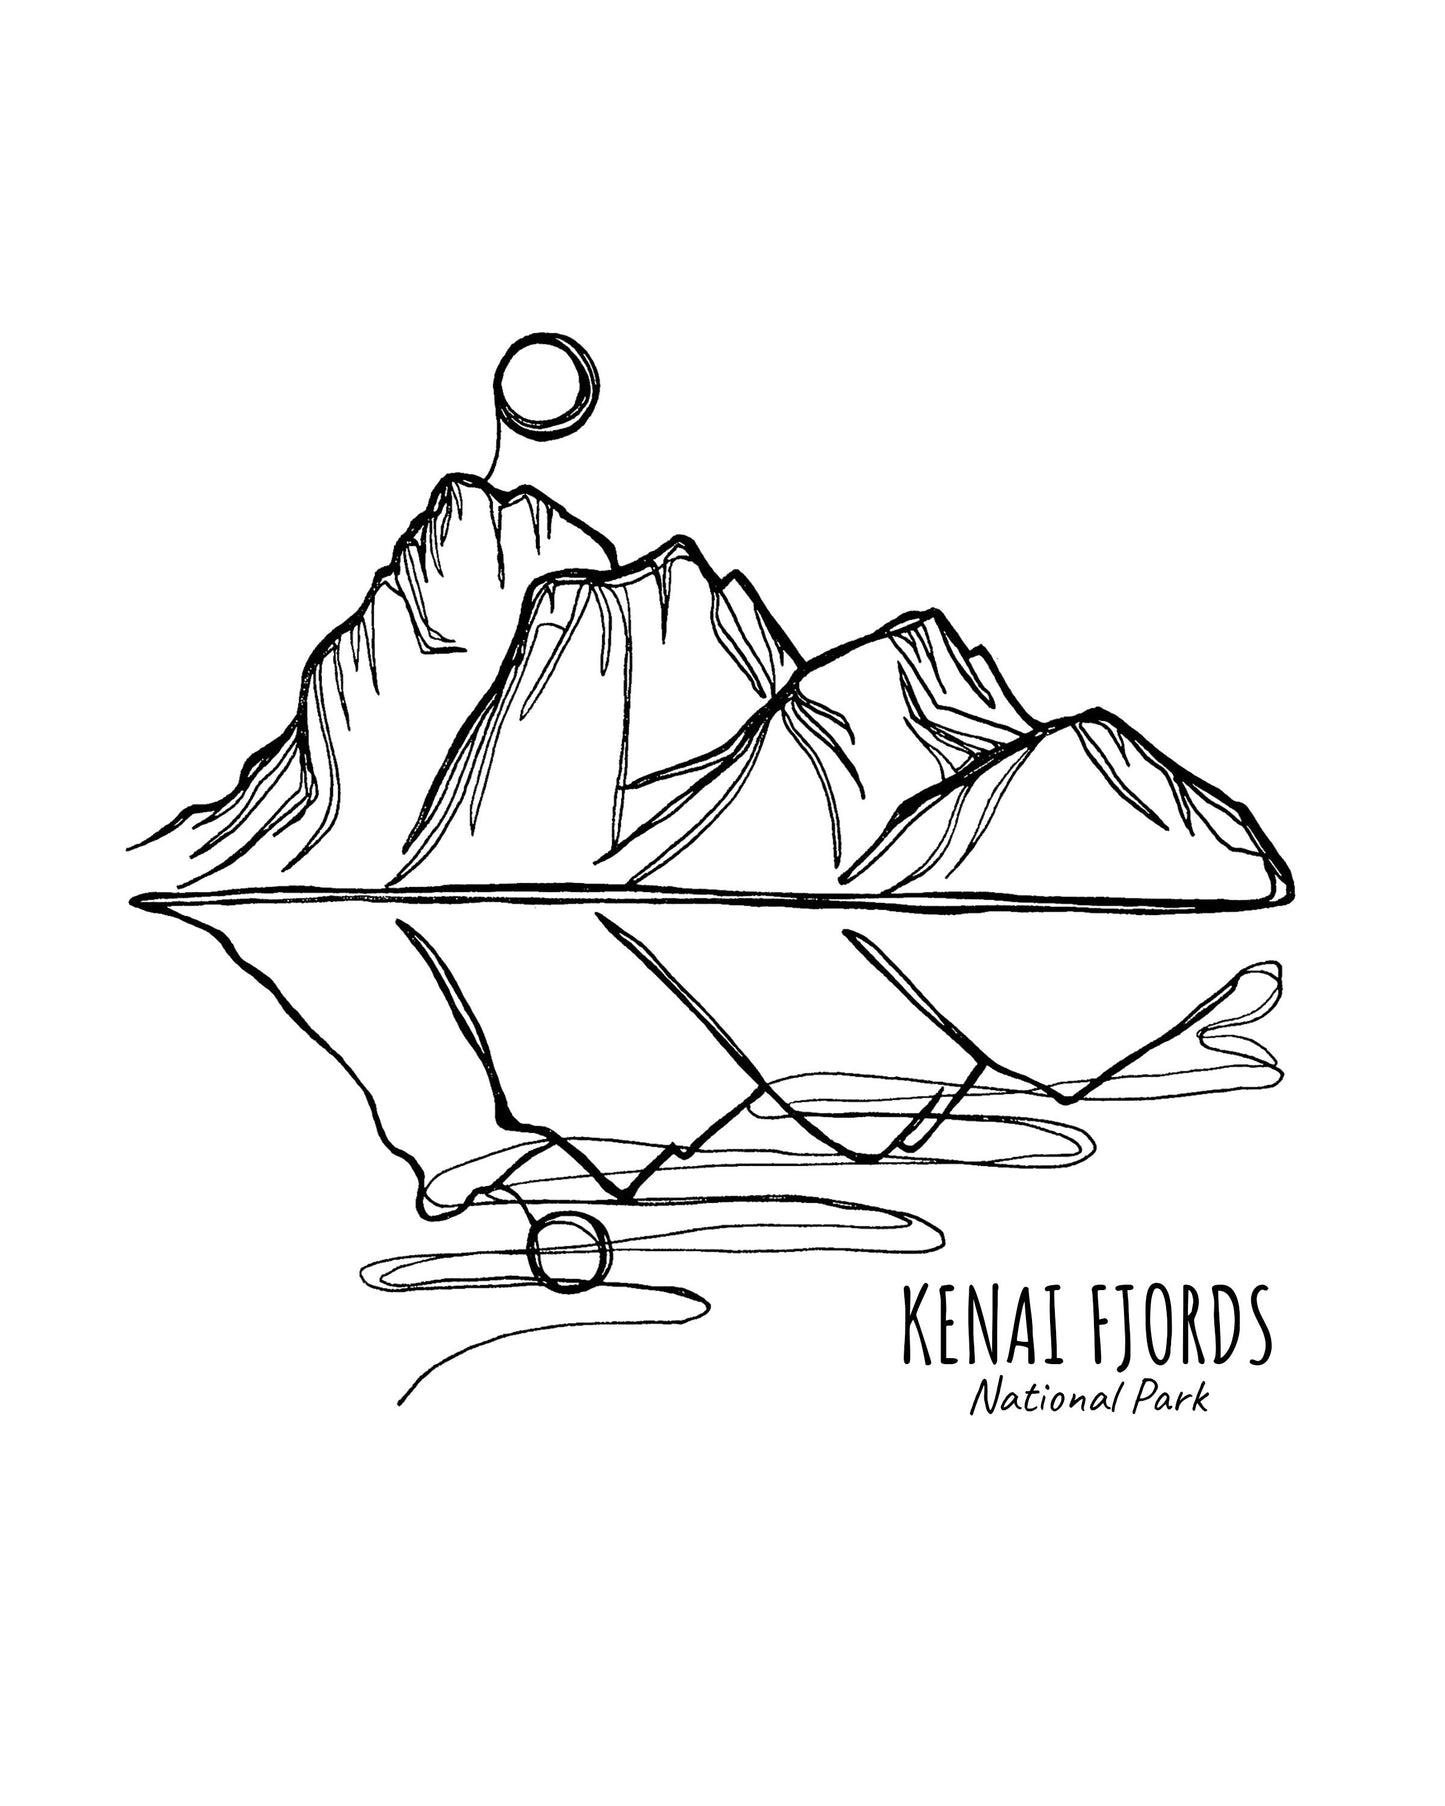 Kenai Fjords National Park, Alaska Continuous Line Print